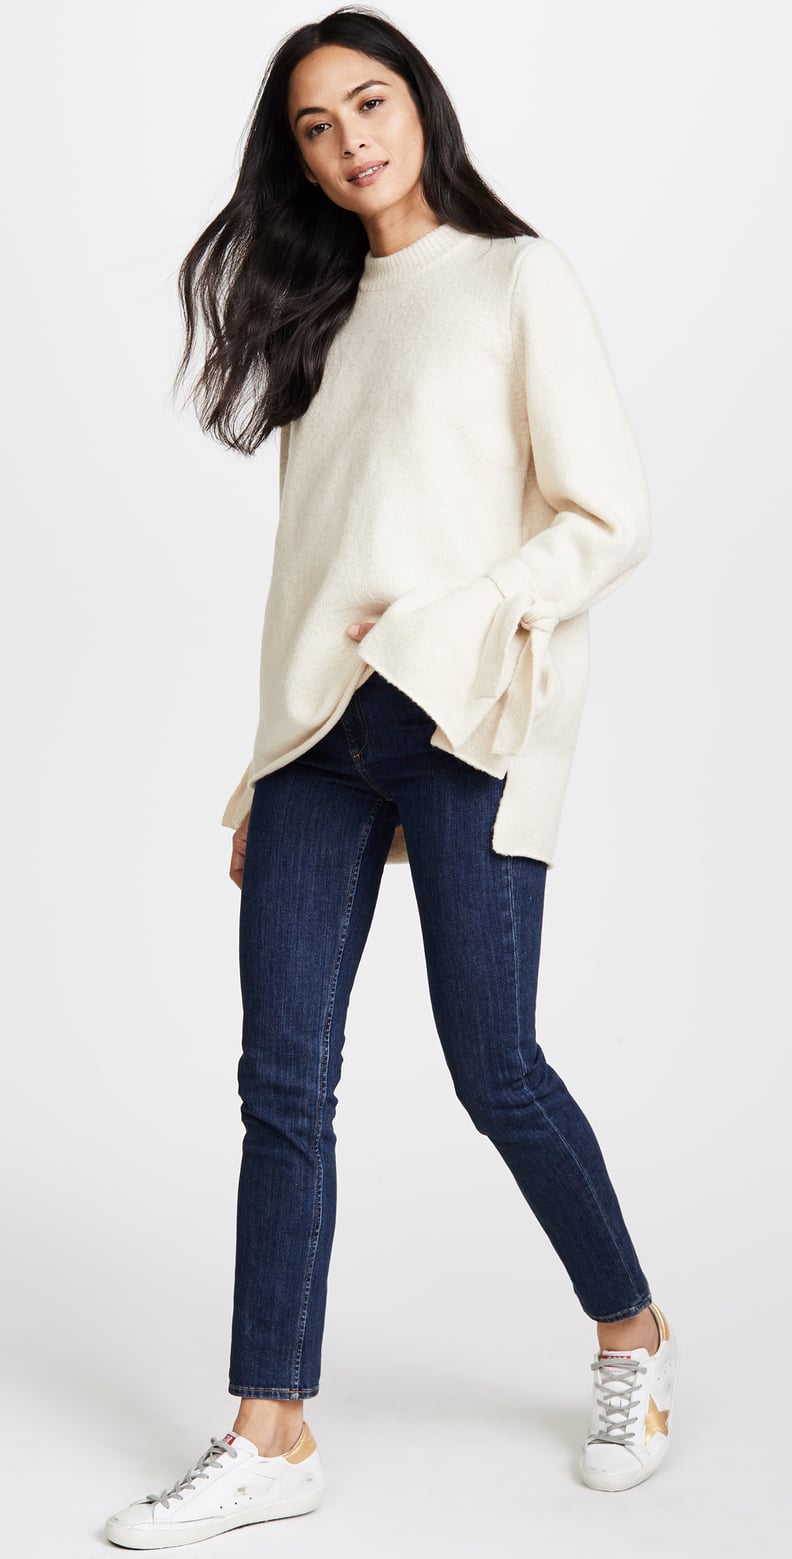 Selena Gomez Wears Madewell Sweater and Jeans | POPSUGAR Fashion